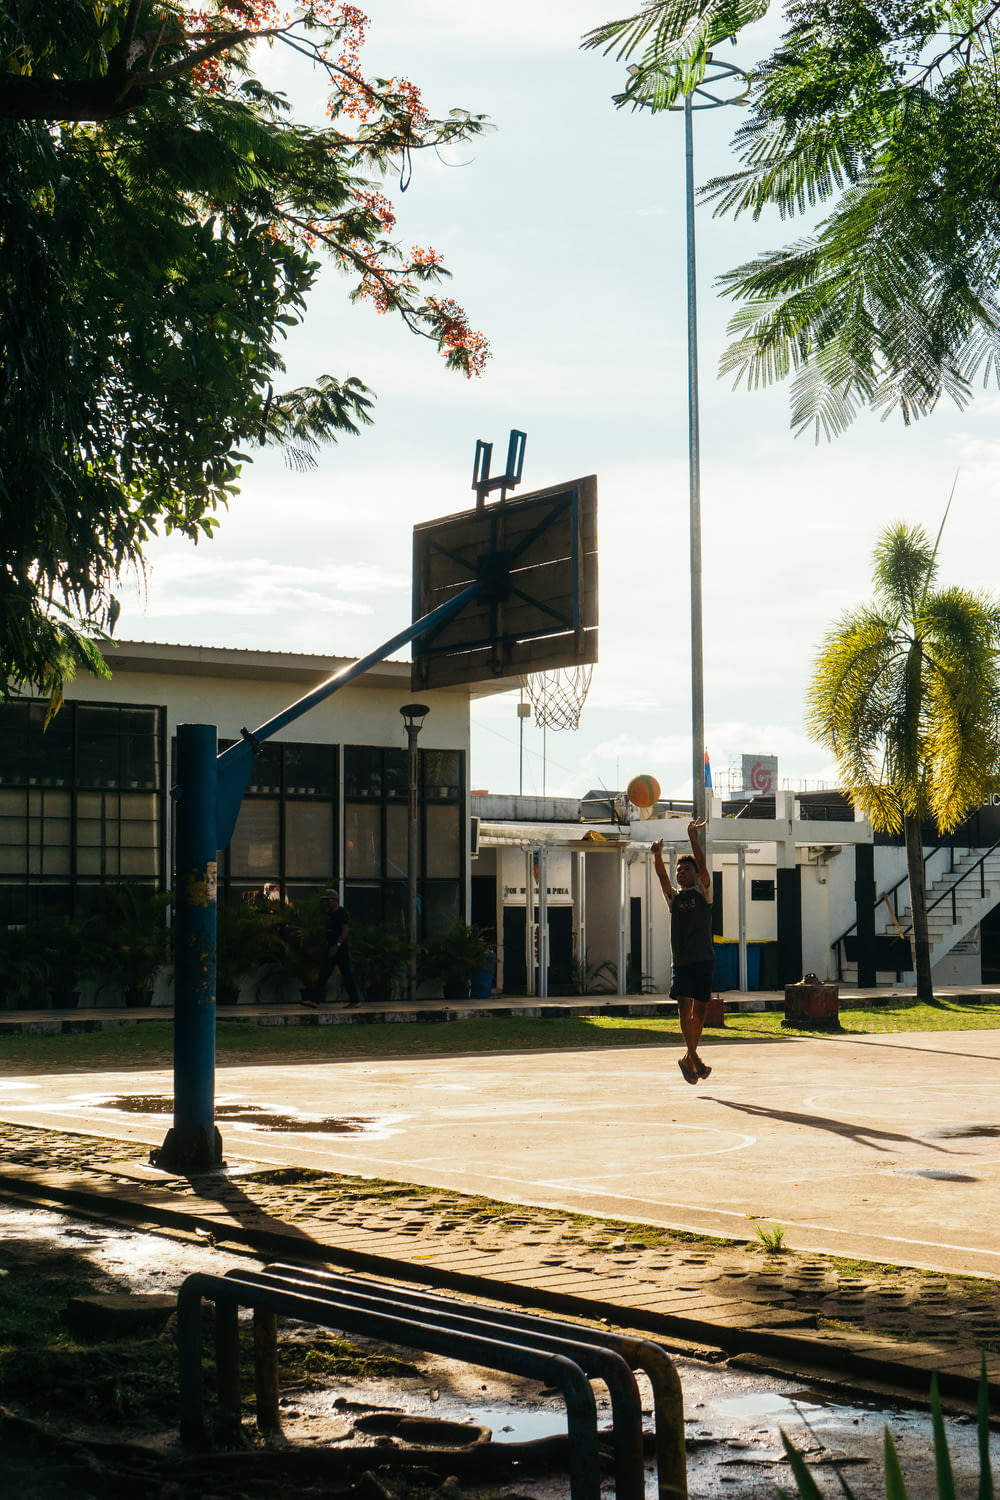 Un uomo sta giocando a basket su un campo da basket